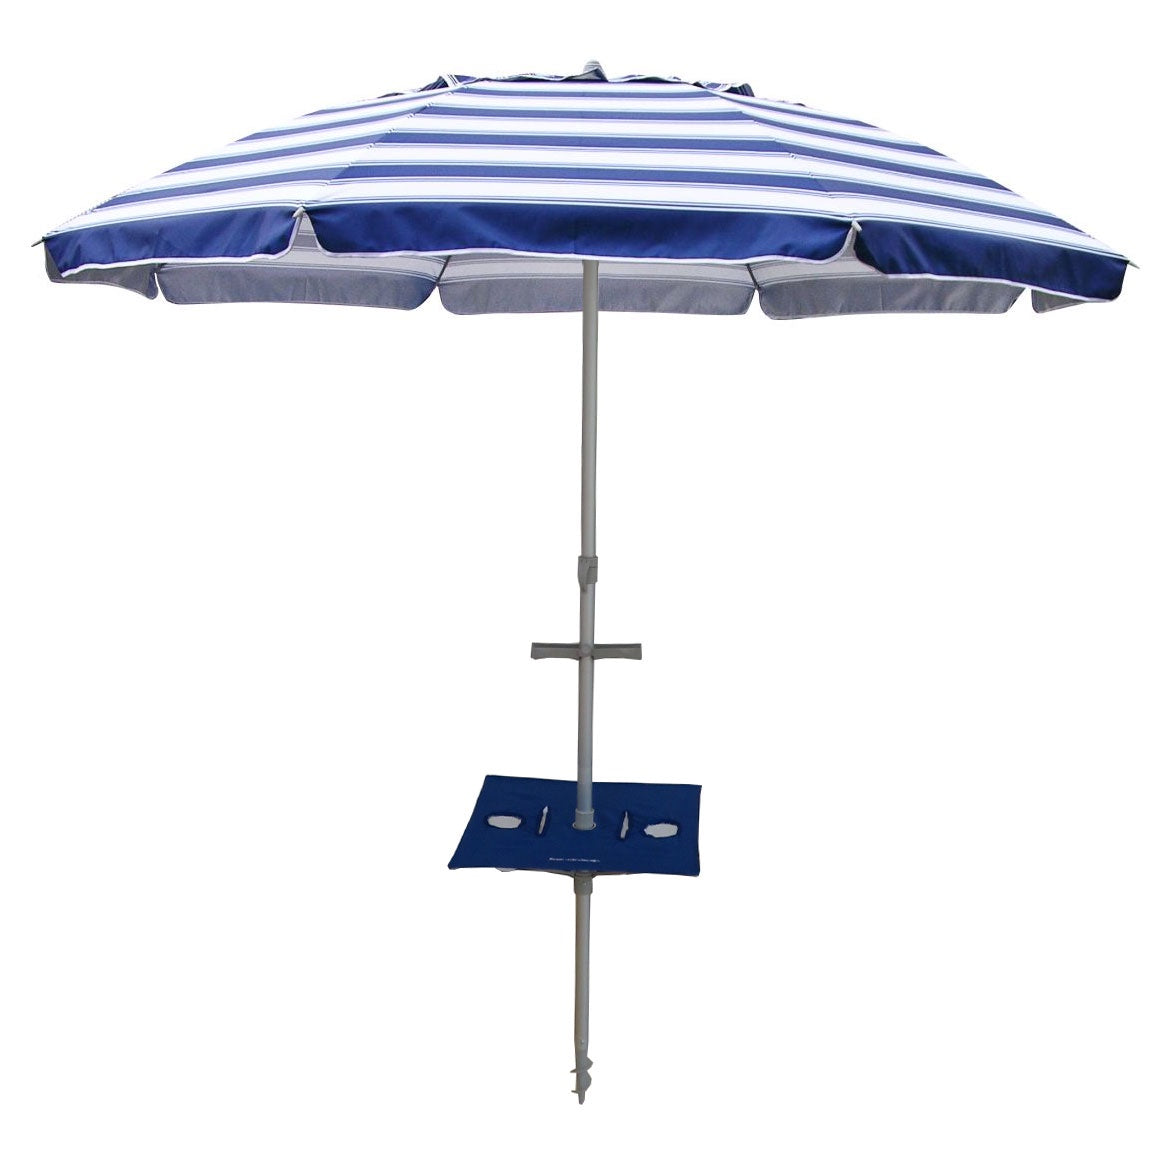 Daytripper 210cm with Pole Table Beach Umbrella